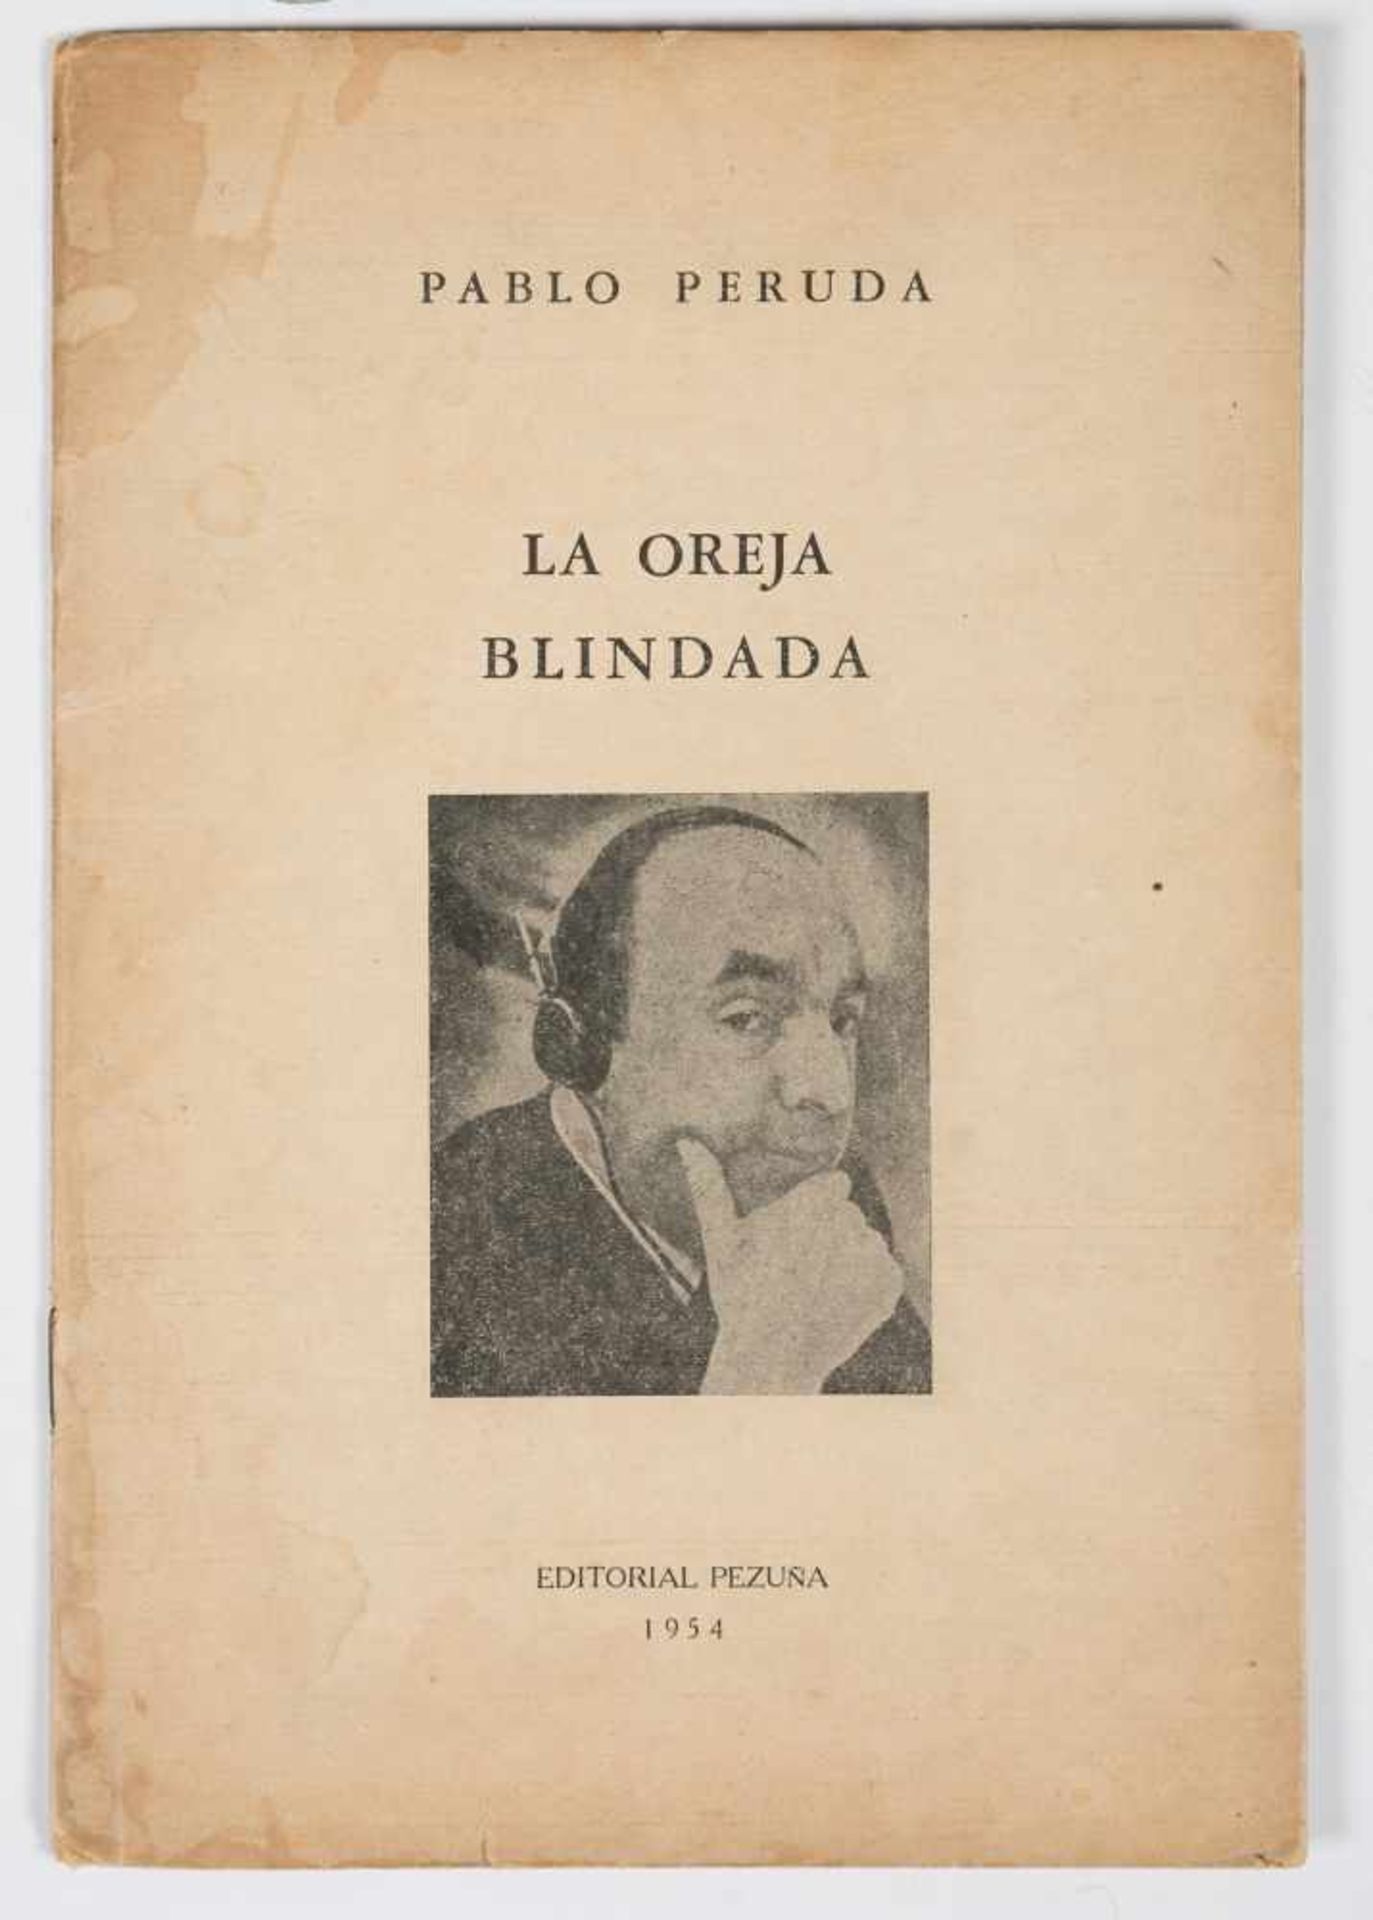 Peruda, Pablo (pseudonom of the poet Julio Carlos Díaz Usandivaras parodying Neruda). La oreja